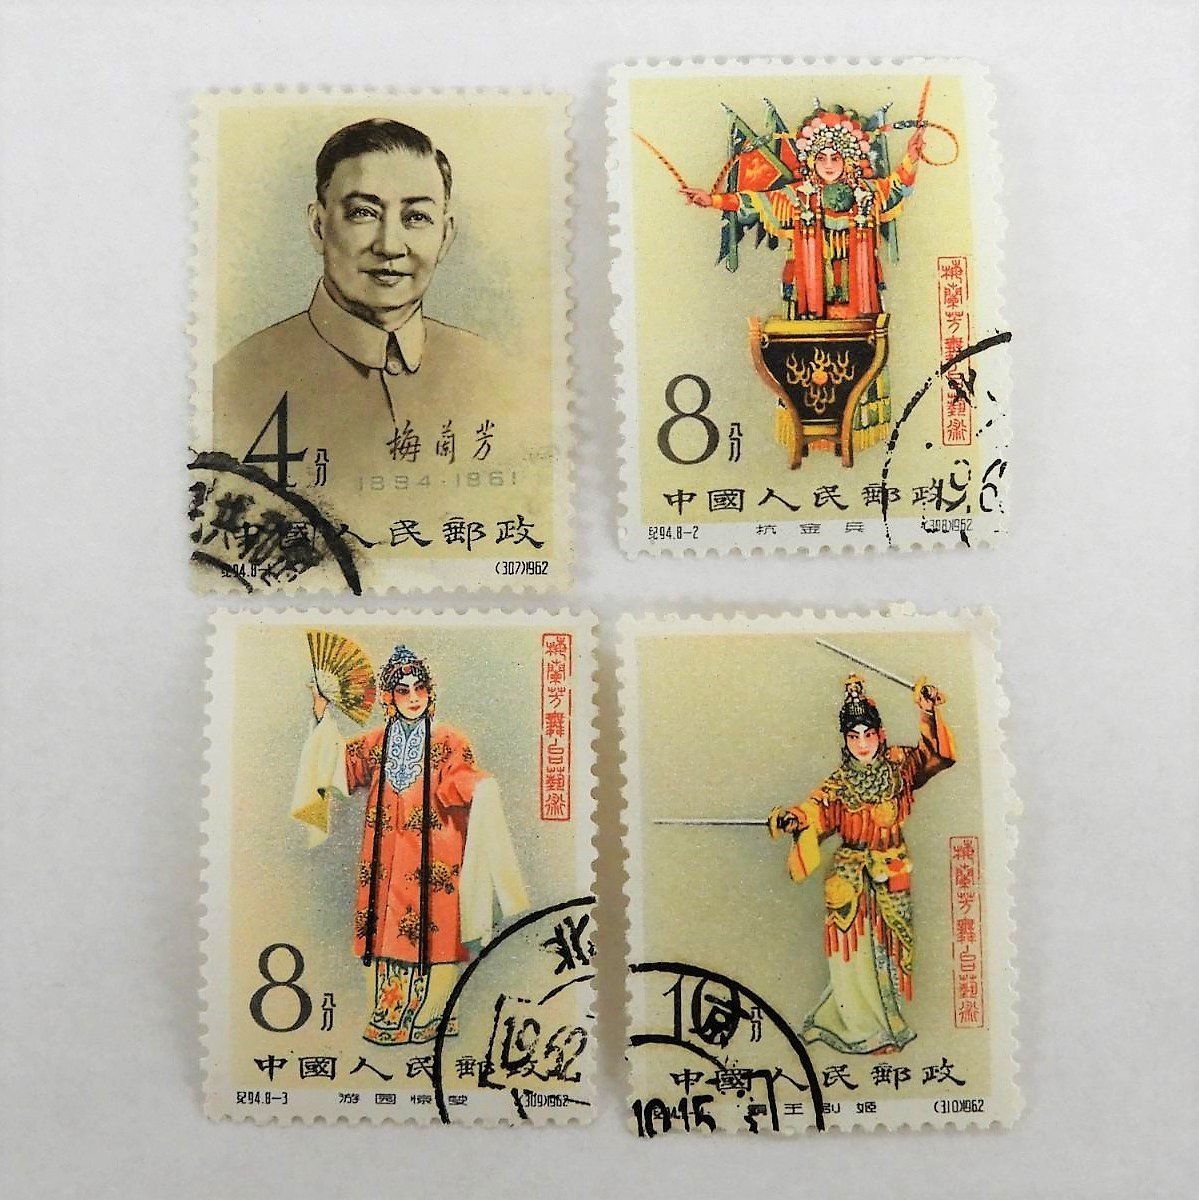 超大特価 中国切手 梅蘭芳6枚 消印付 使用済切手/官製はがき